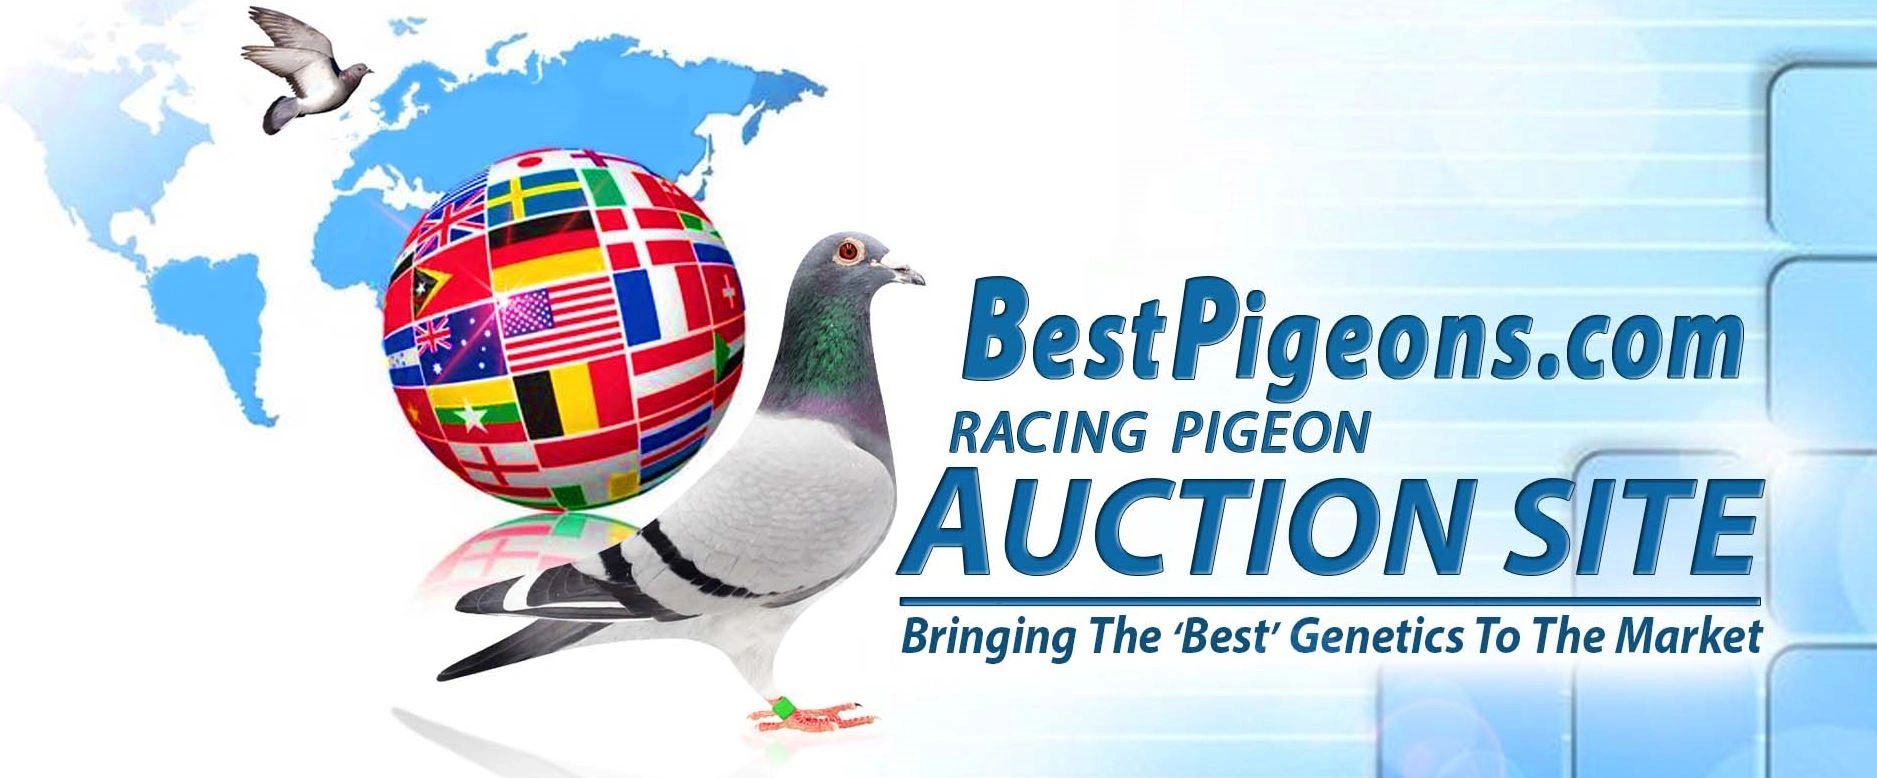 Best Pigeons